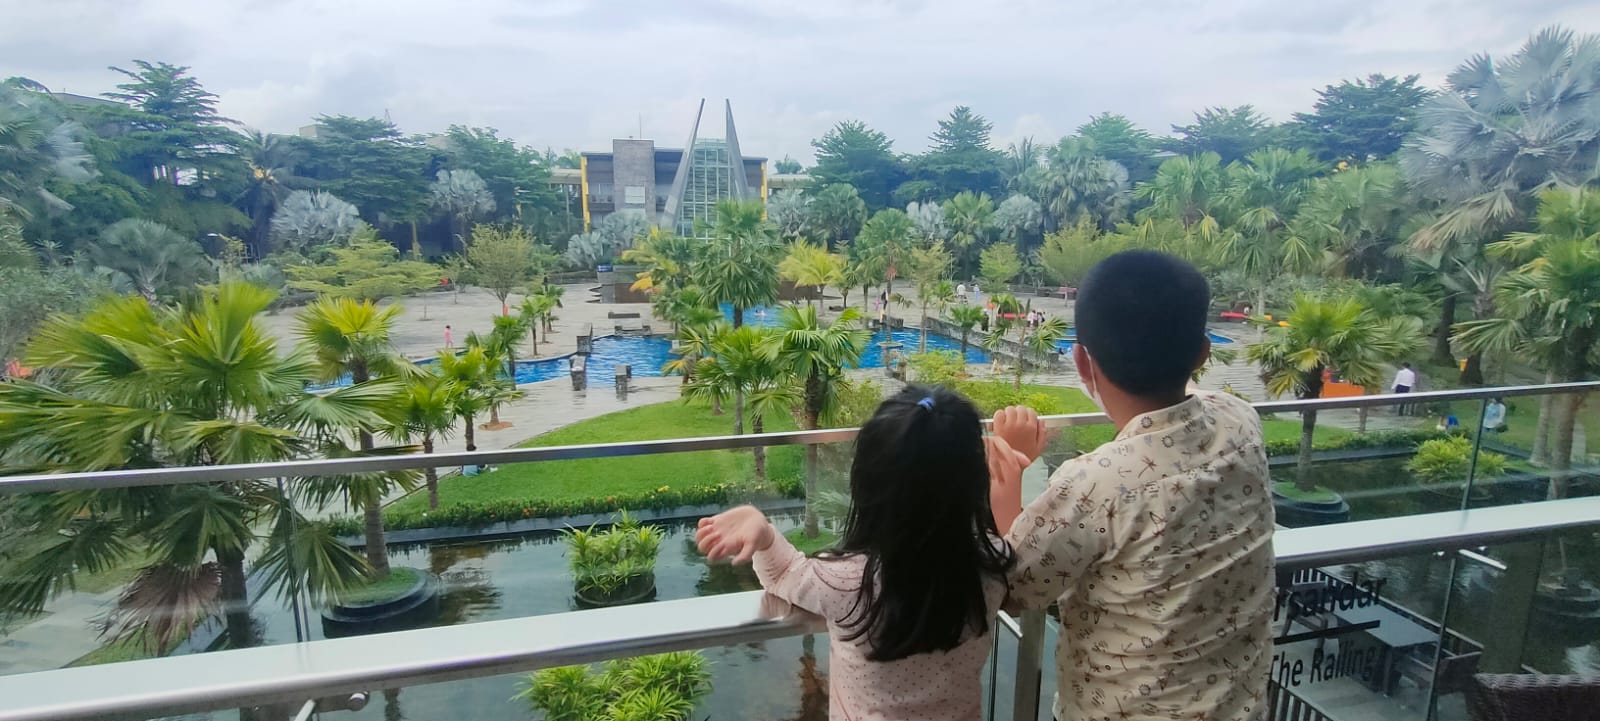 5 Promo Tahun Baru Unik Hotel di Palembang, Hot Banget Bikin Penasaran